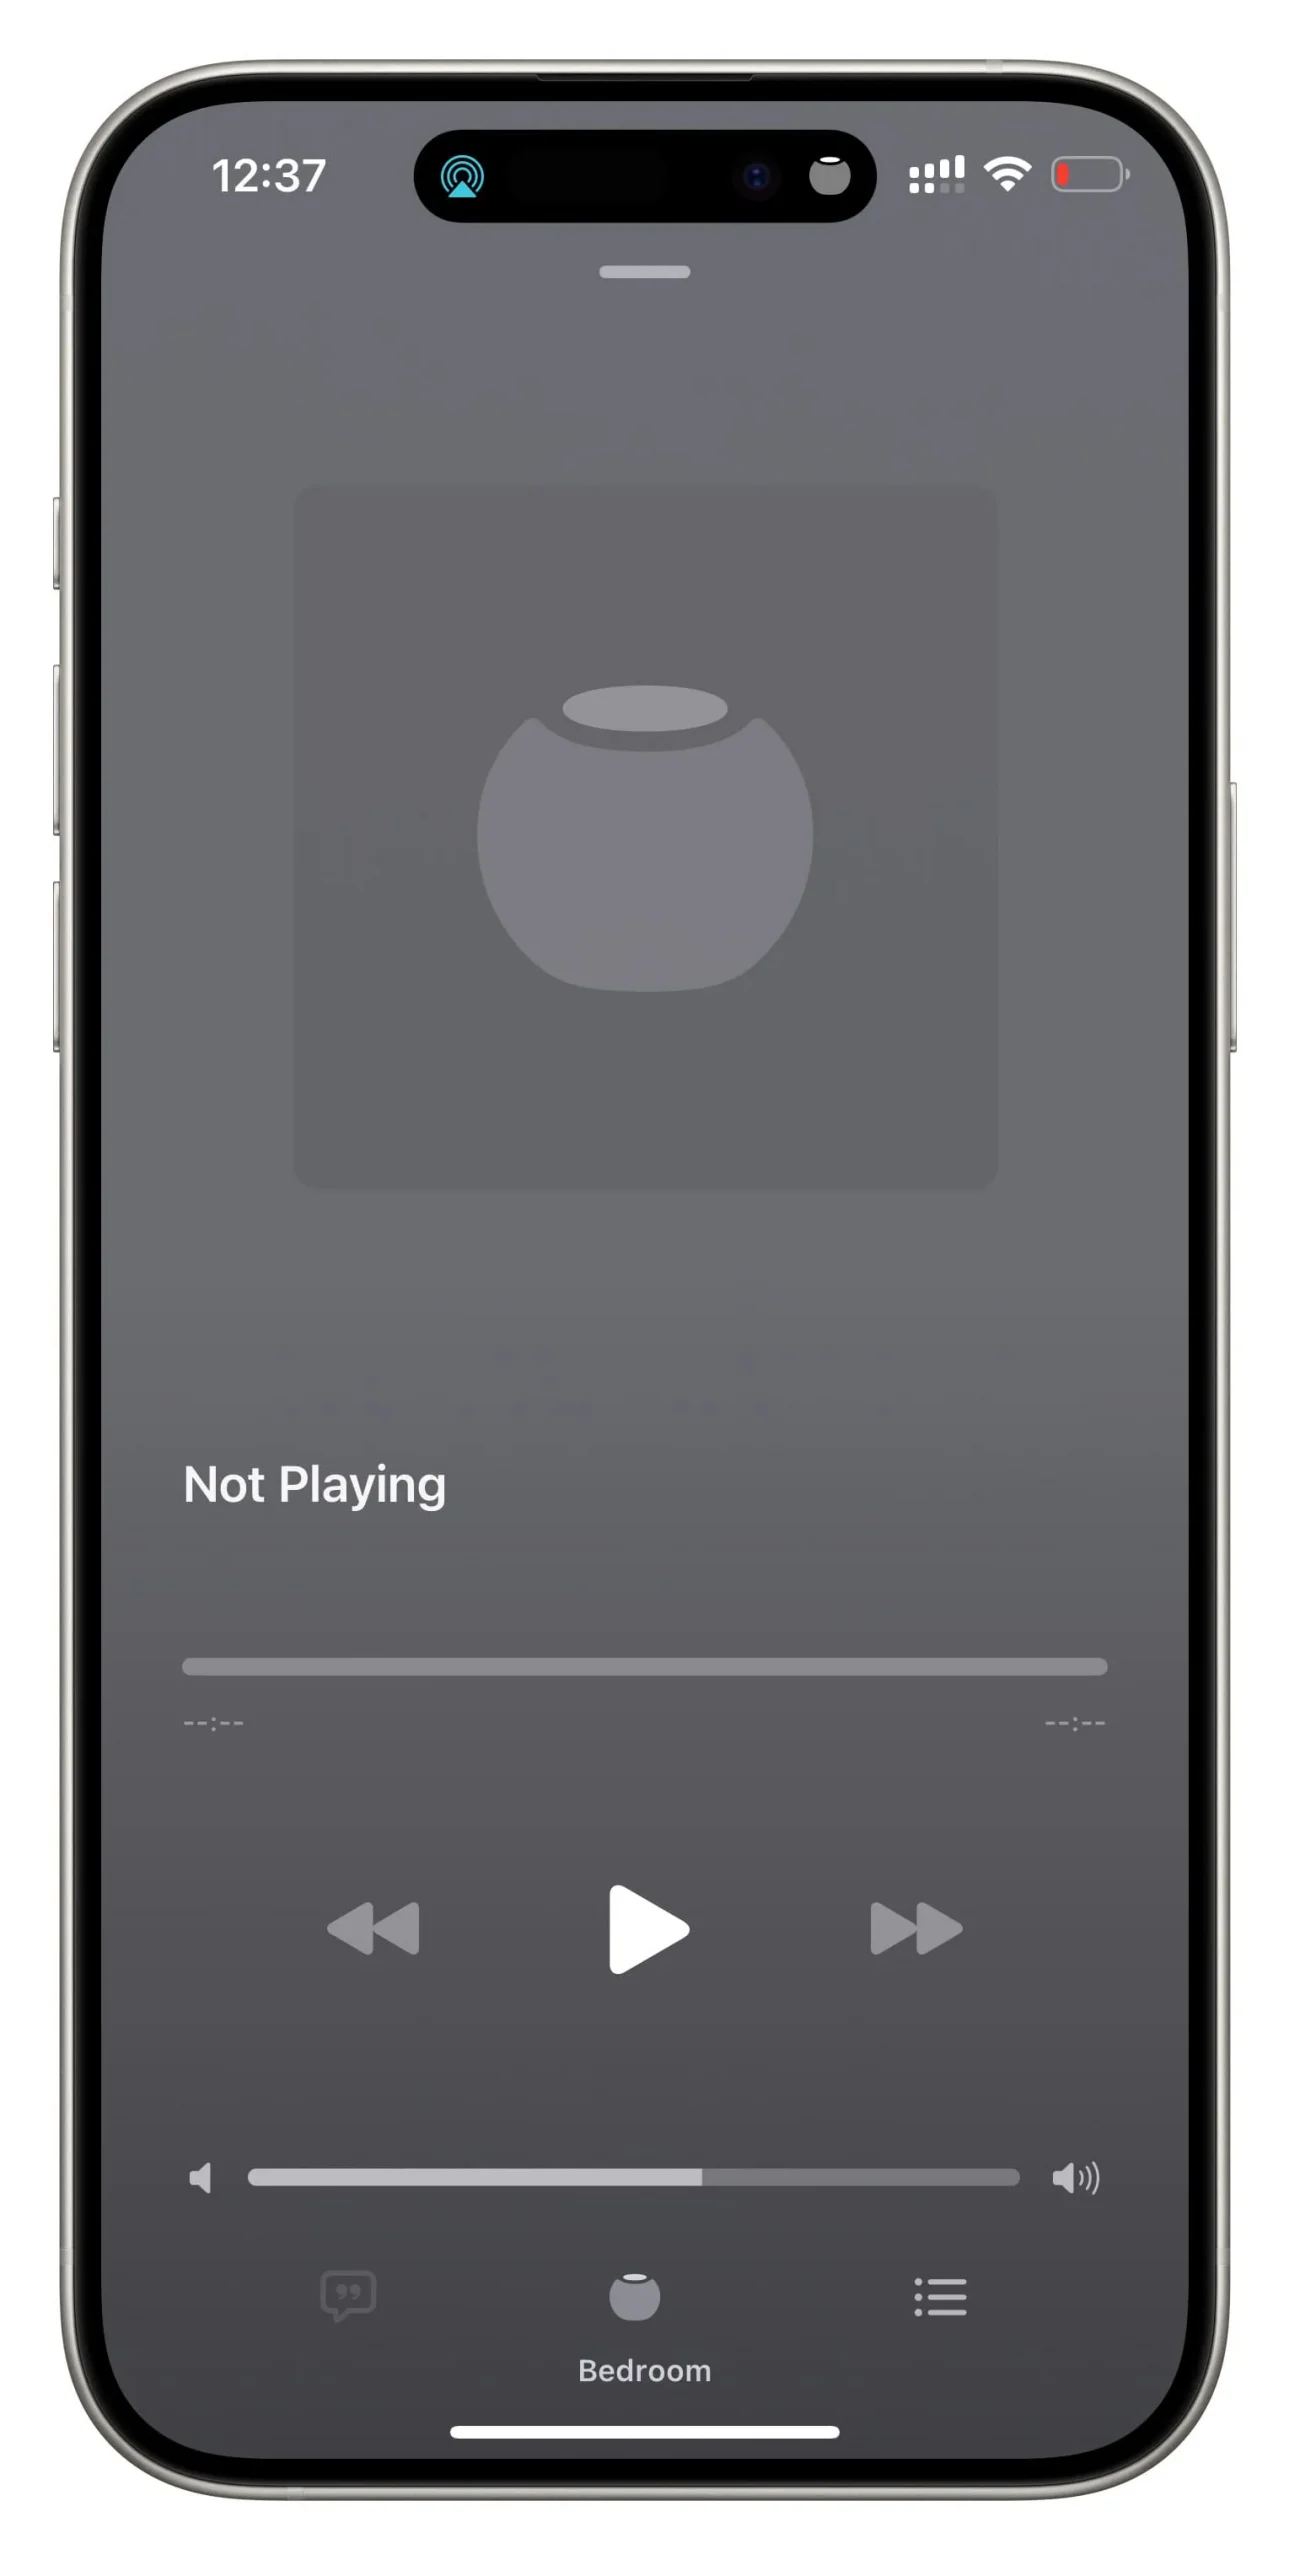 Tela cinza inútil no Apple Music no iPhone